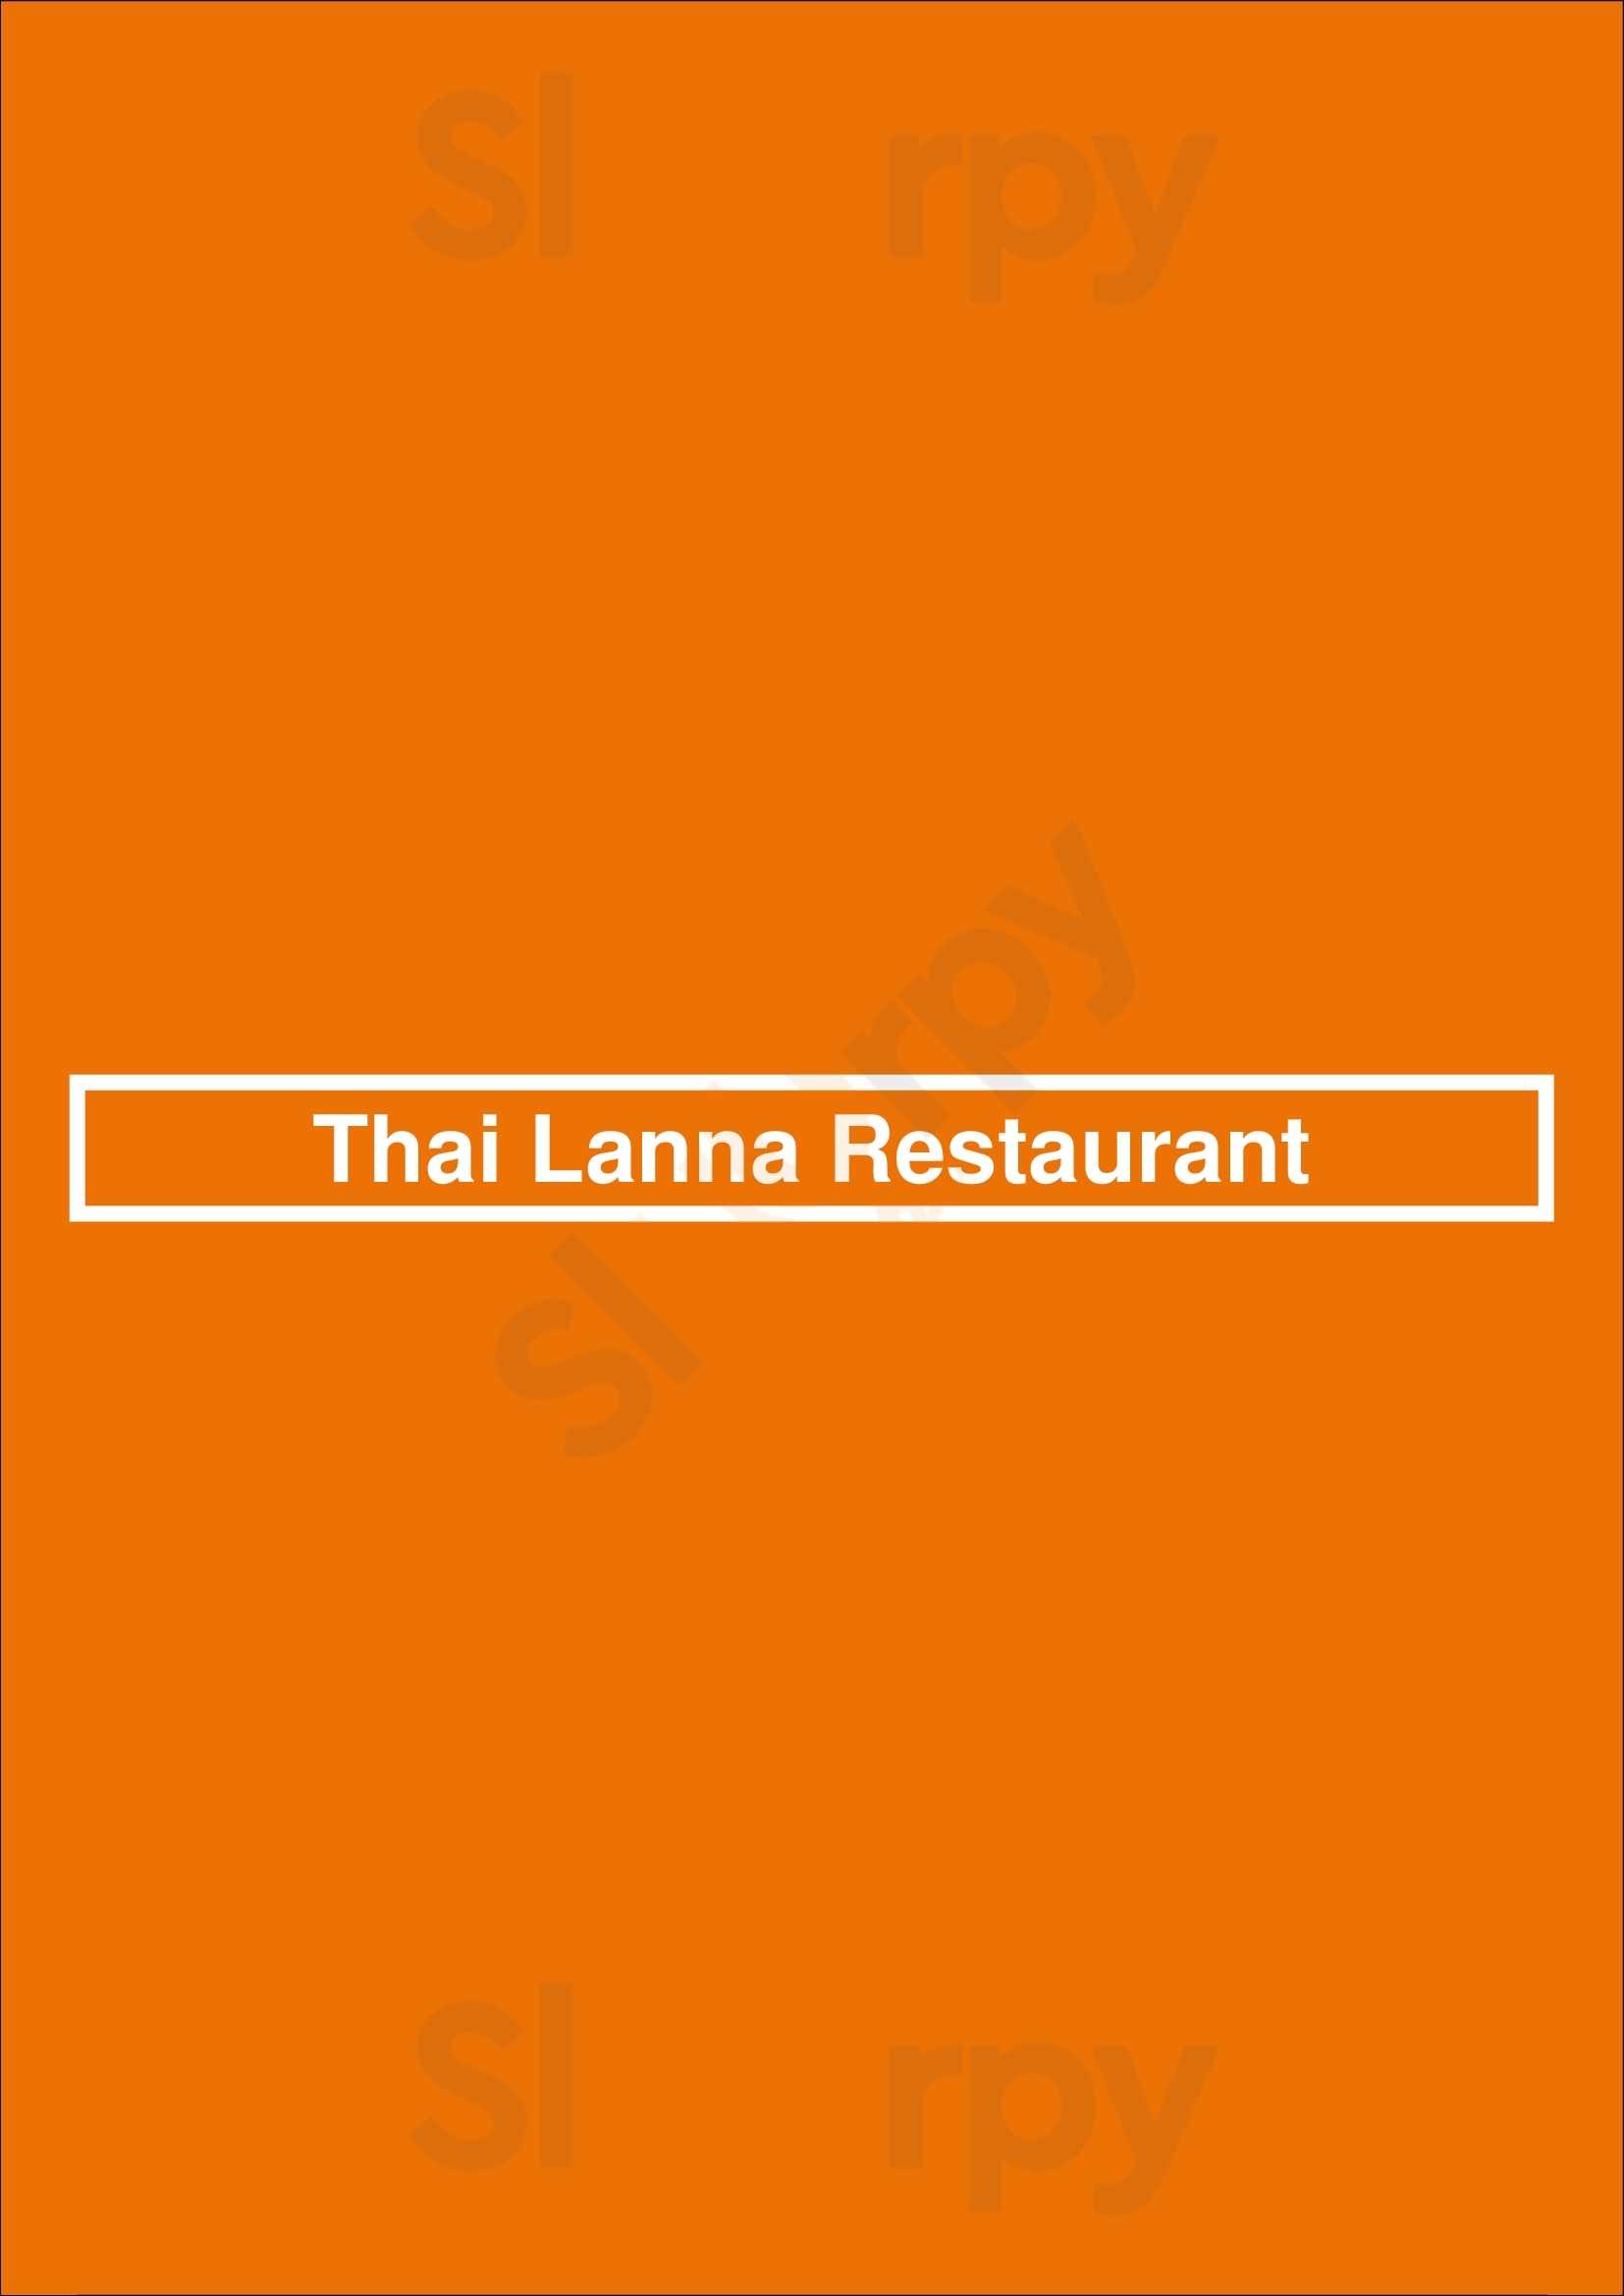 Thai Lanna Restaurant Houston Menu - 1